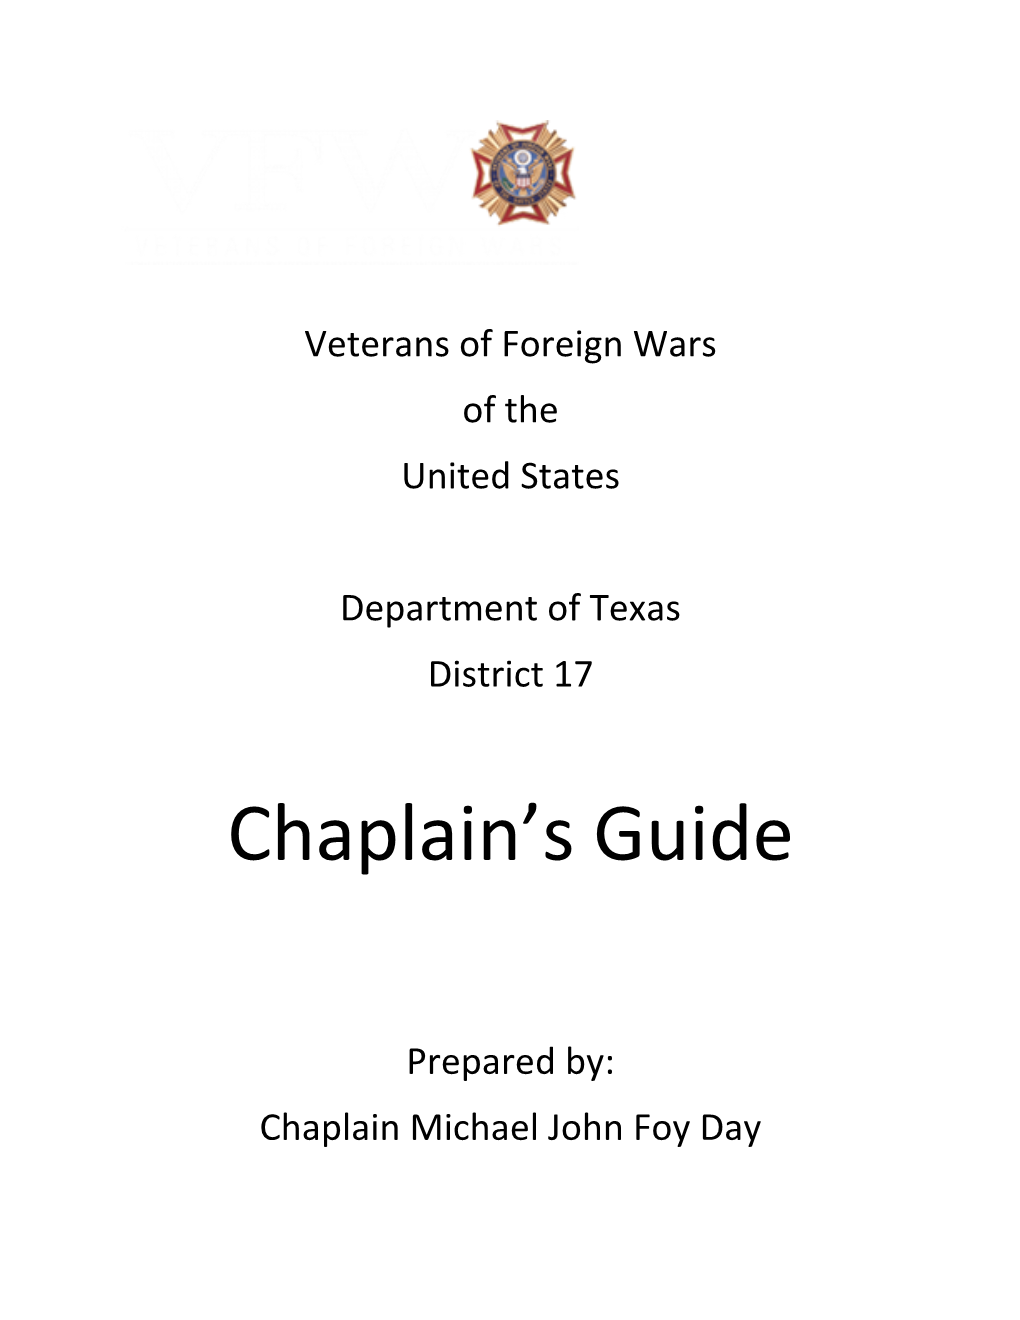 District Chaplain Guide